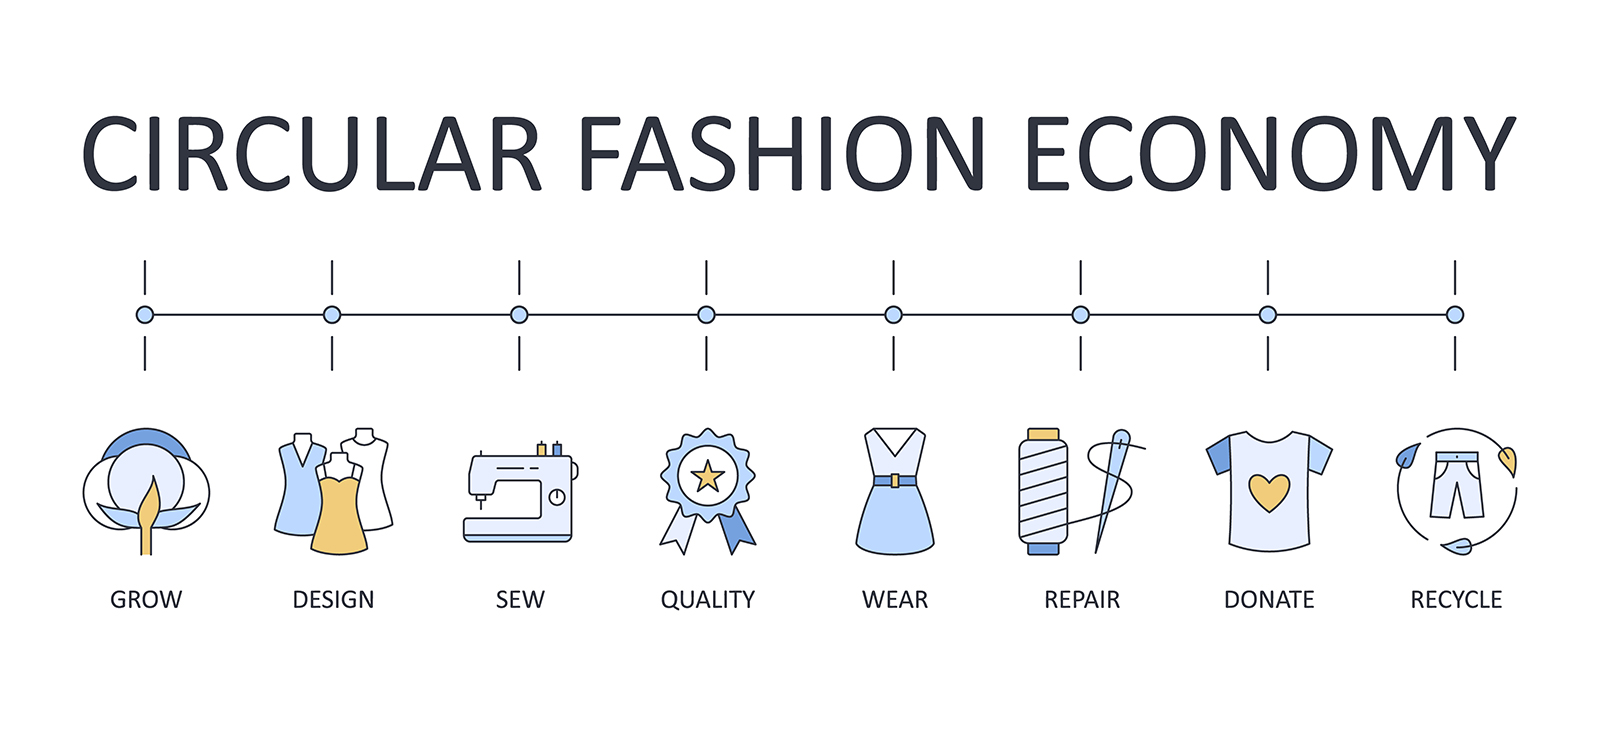 Fashion circular economy infographic